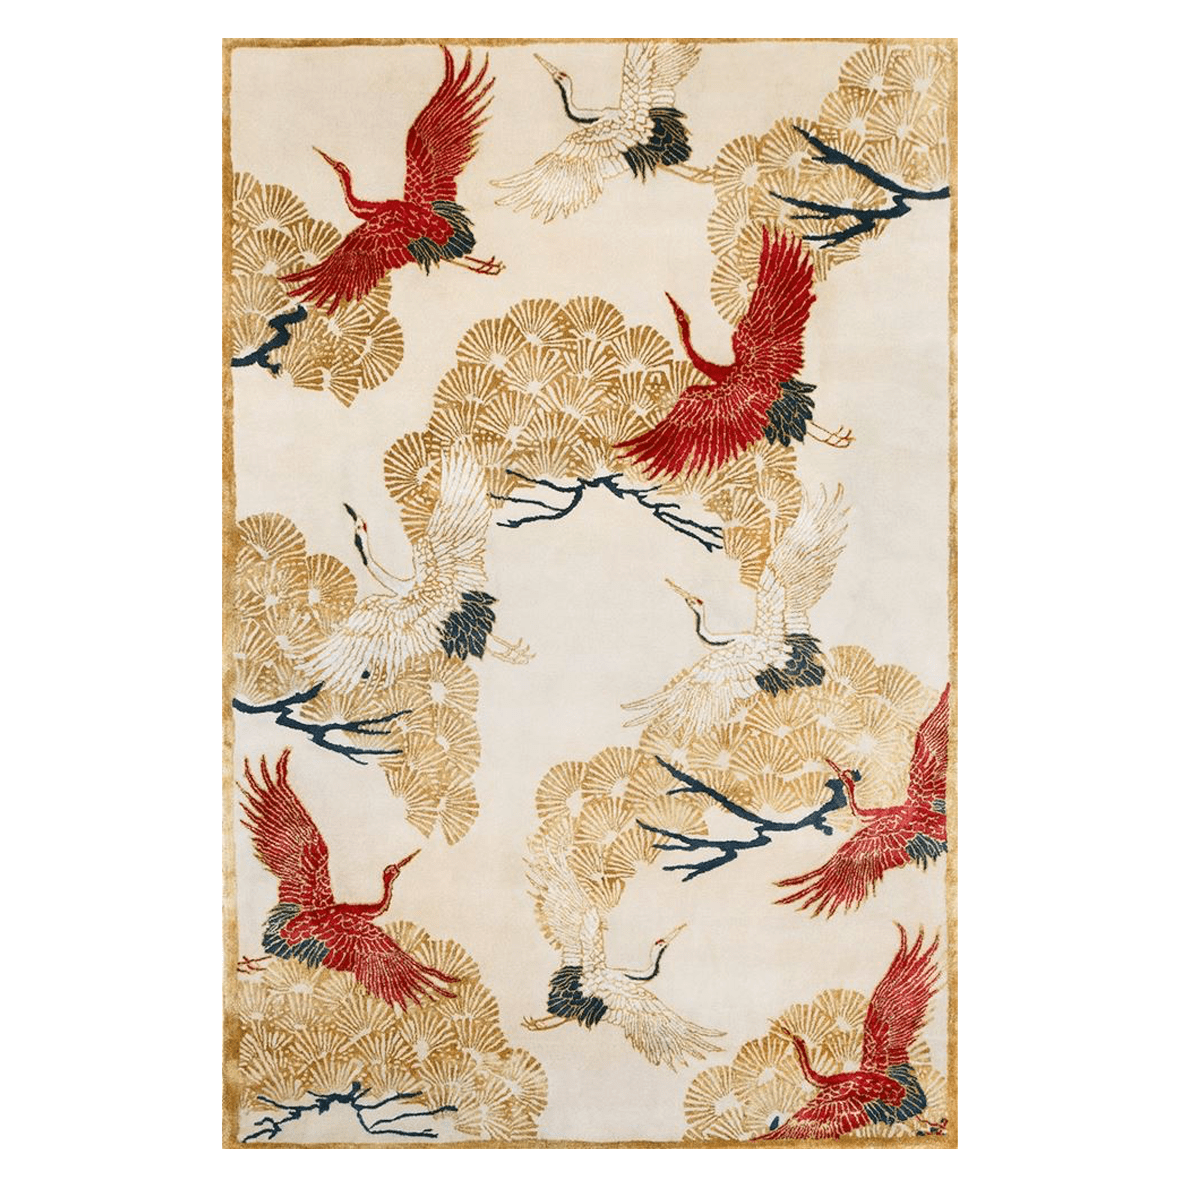 Cranes in Trees 274 x 183cm Rug